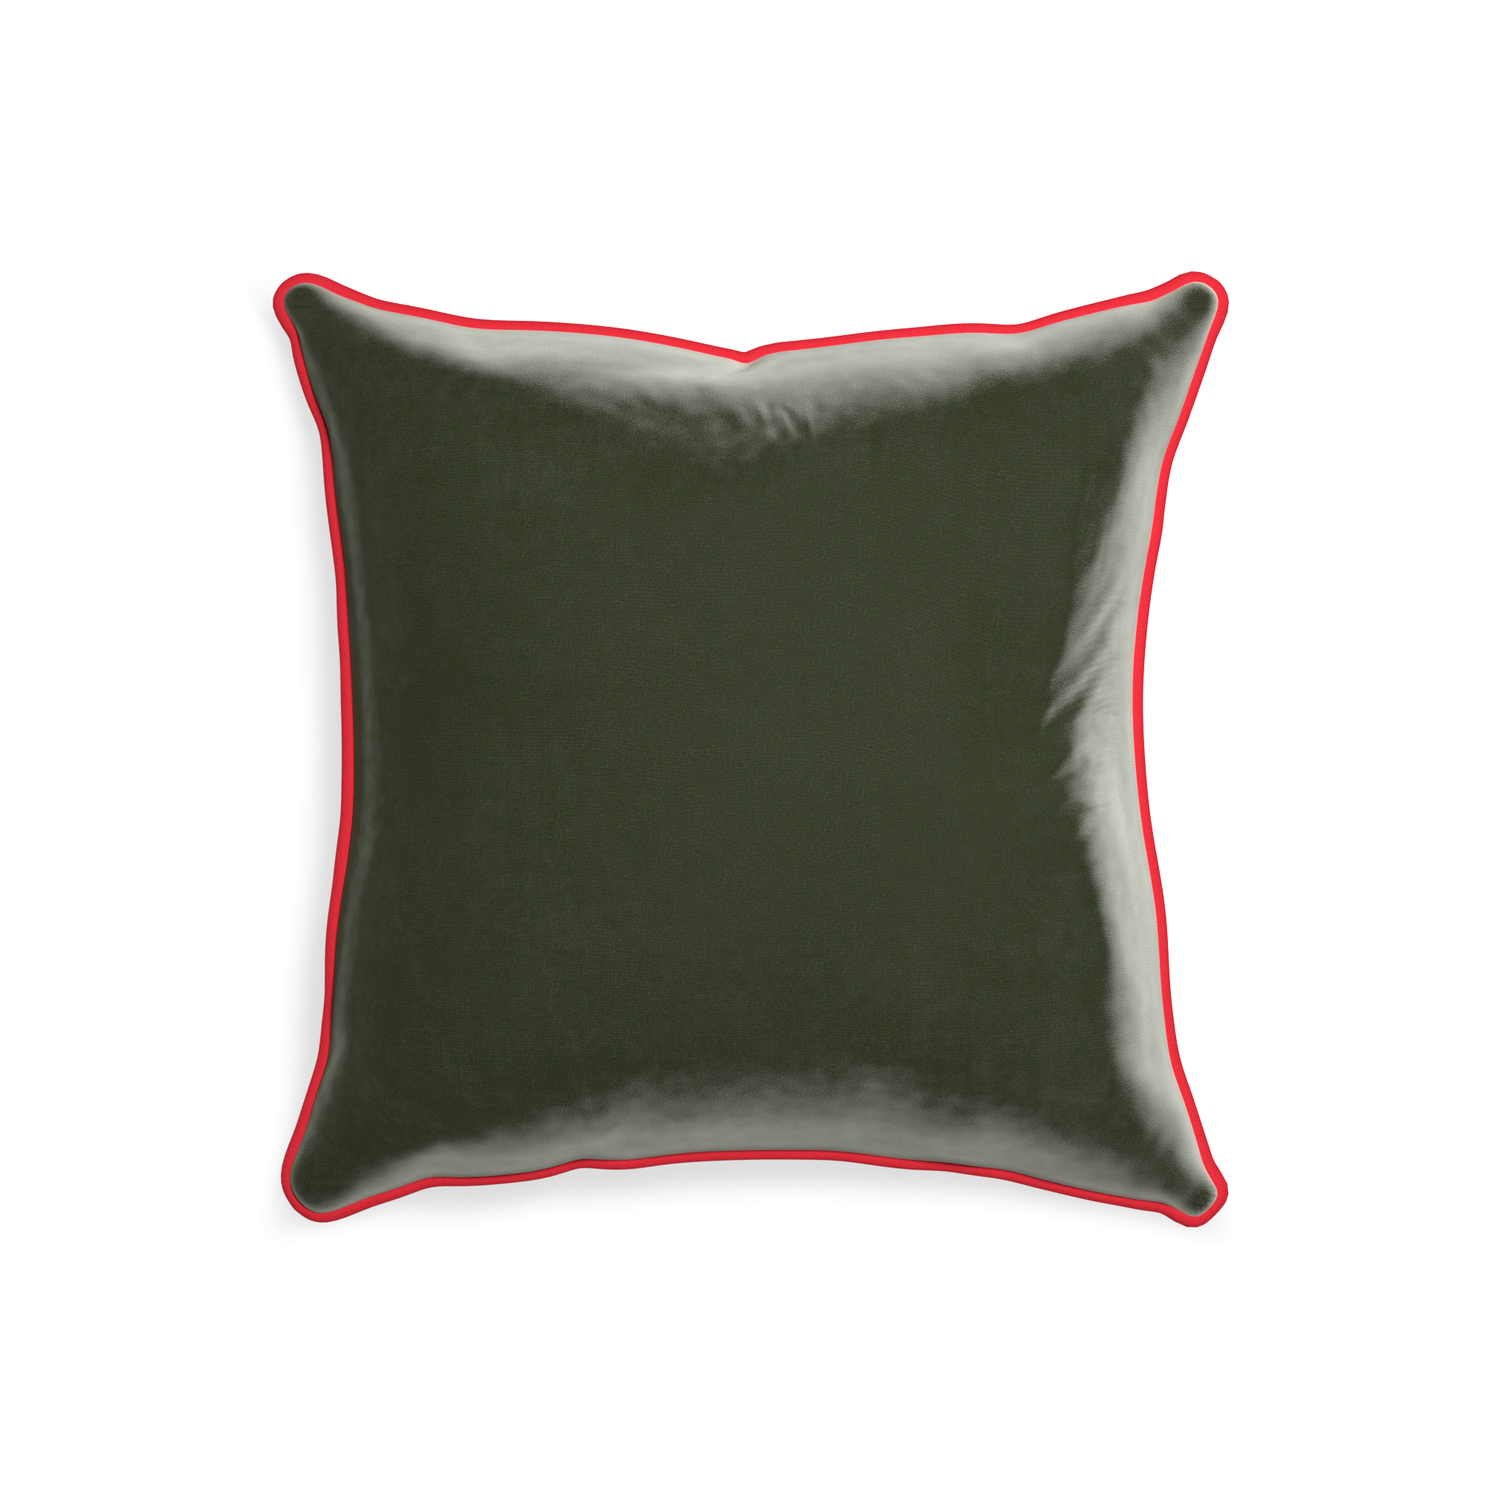 20-square fern velvet custom pillow with cherry piping on white background